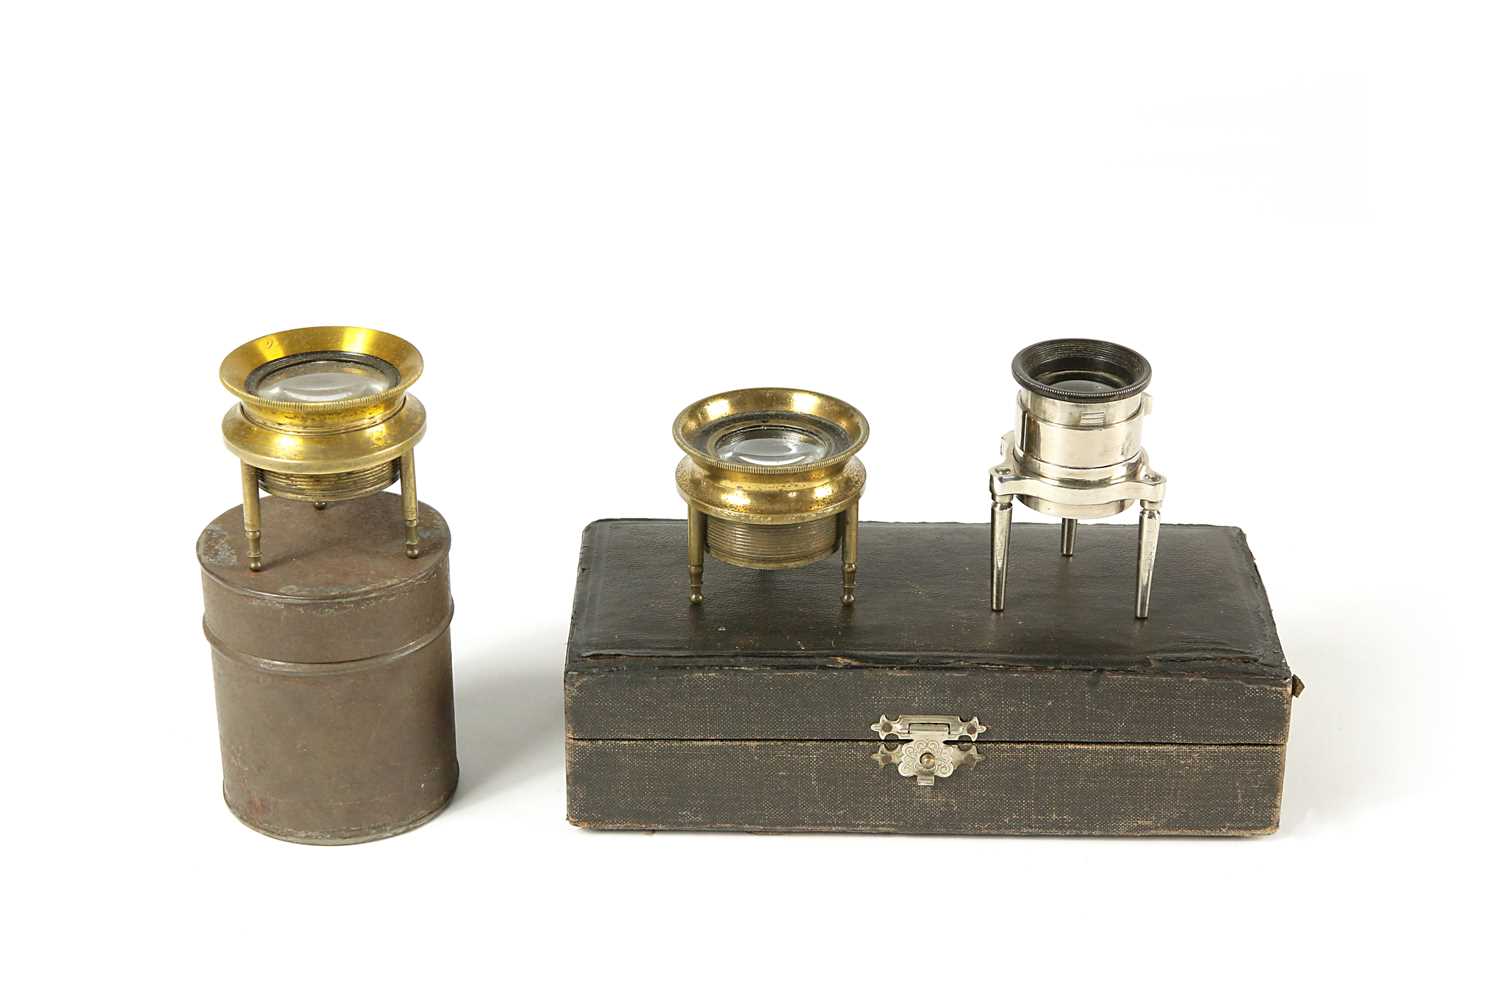 Lot 145 - Three Short Brass Tripod Microscopes, 19th century and later.